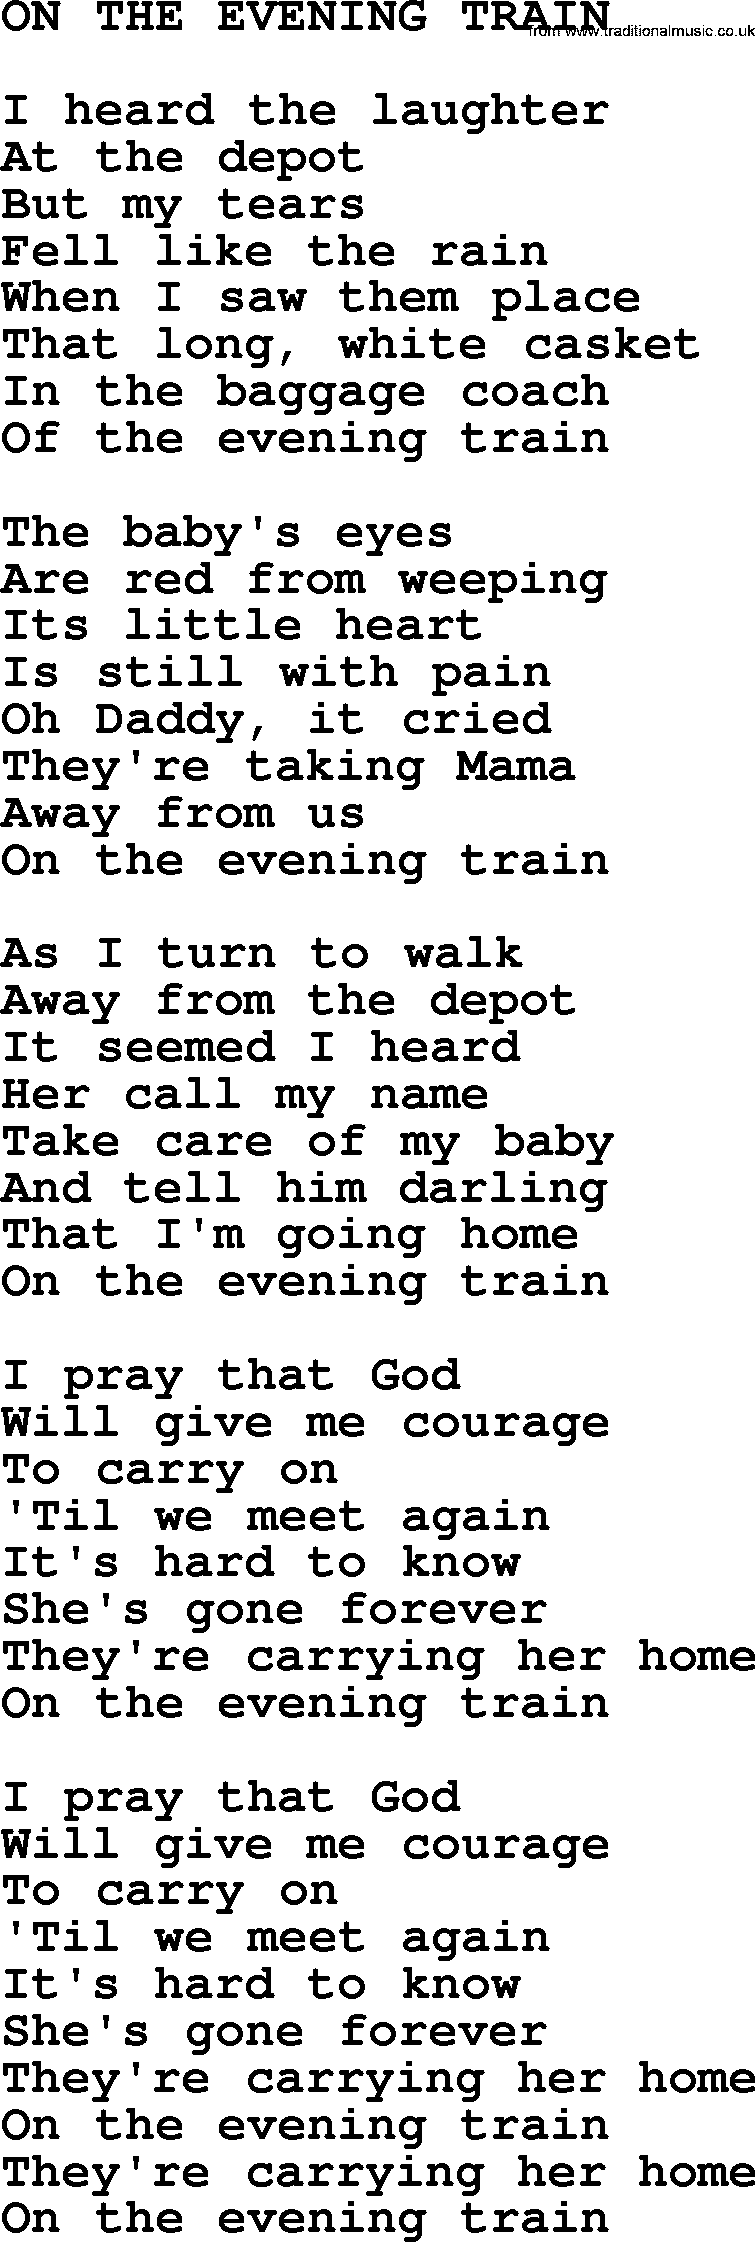 Johnny Cash song On The Evening Train.txt lyrics